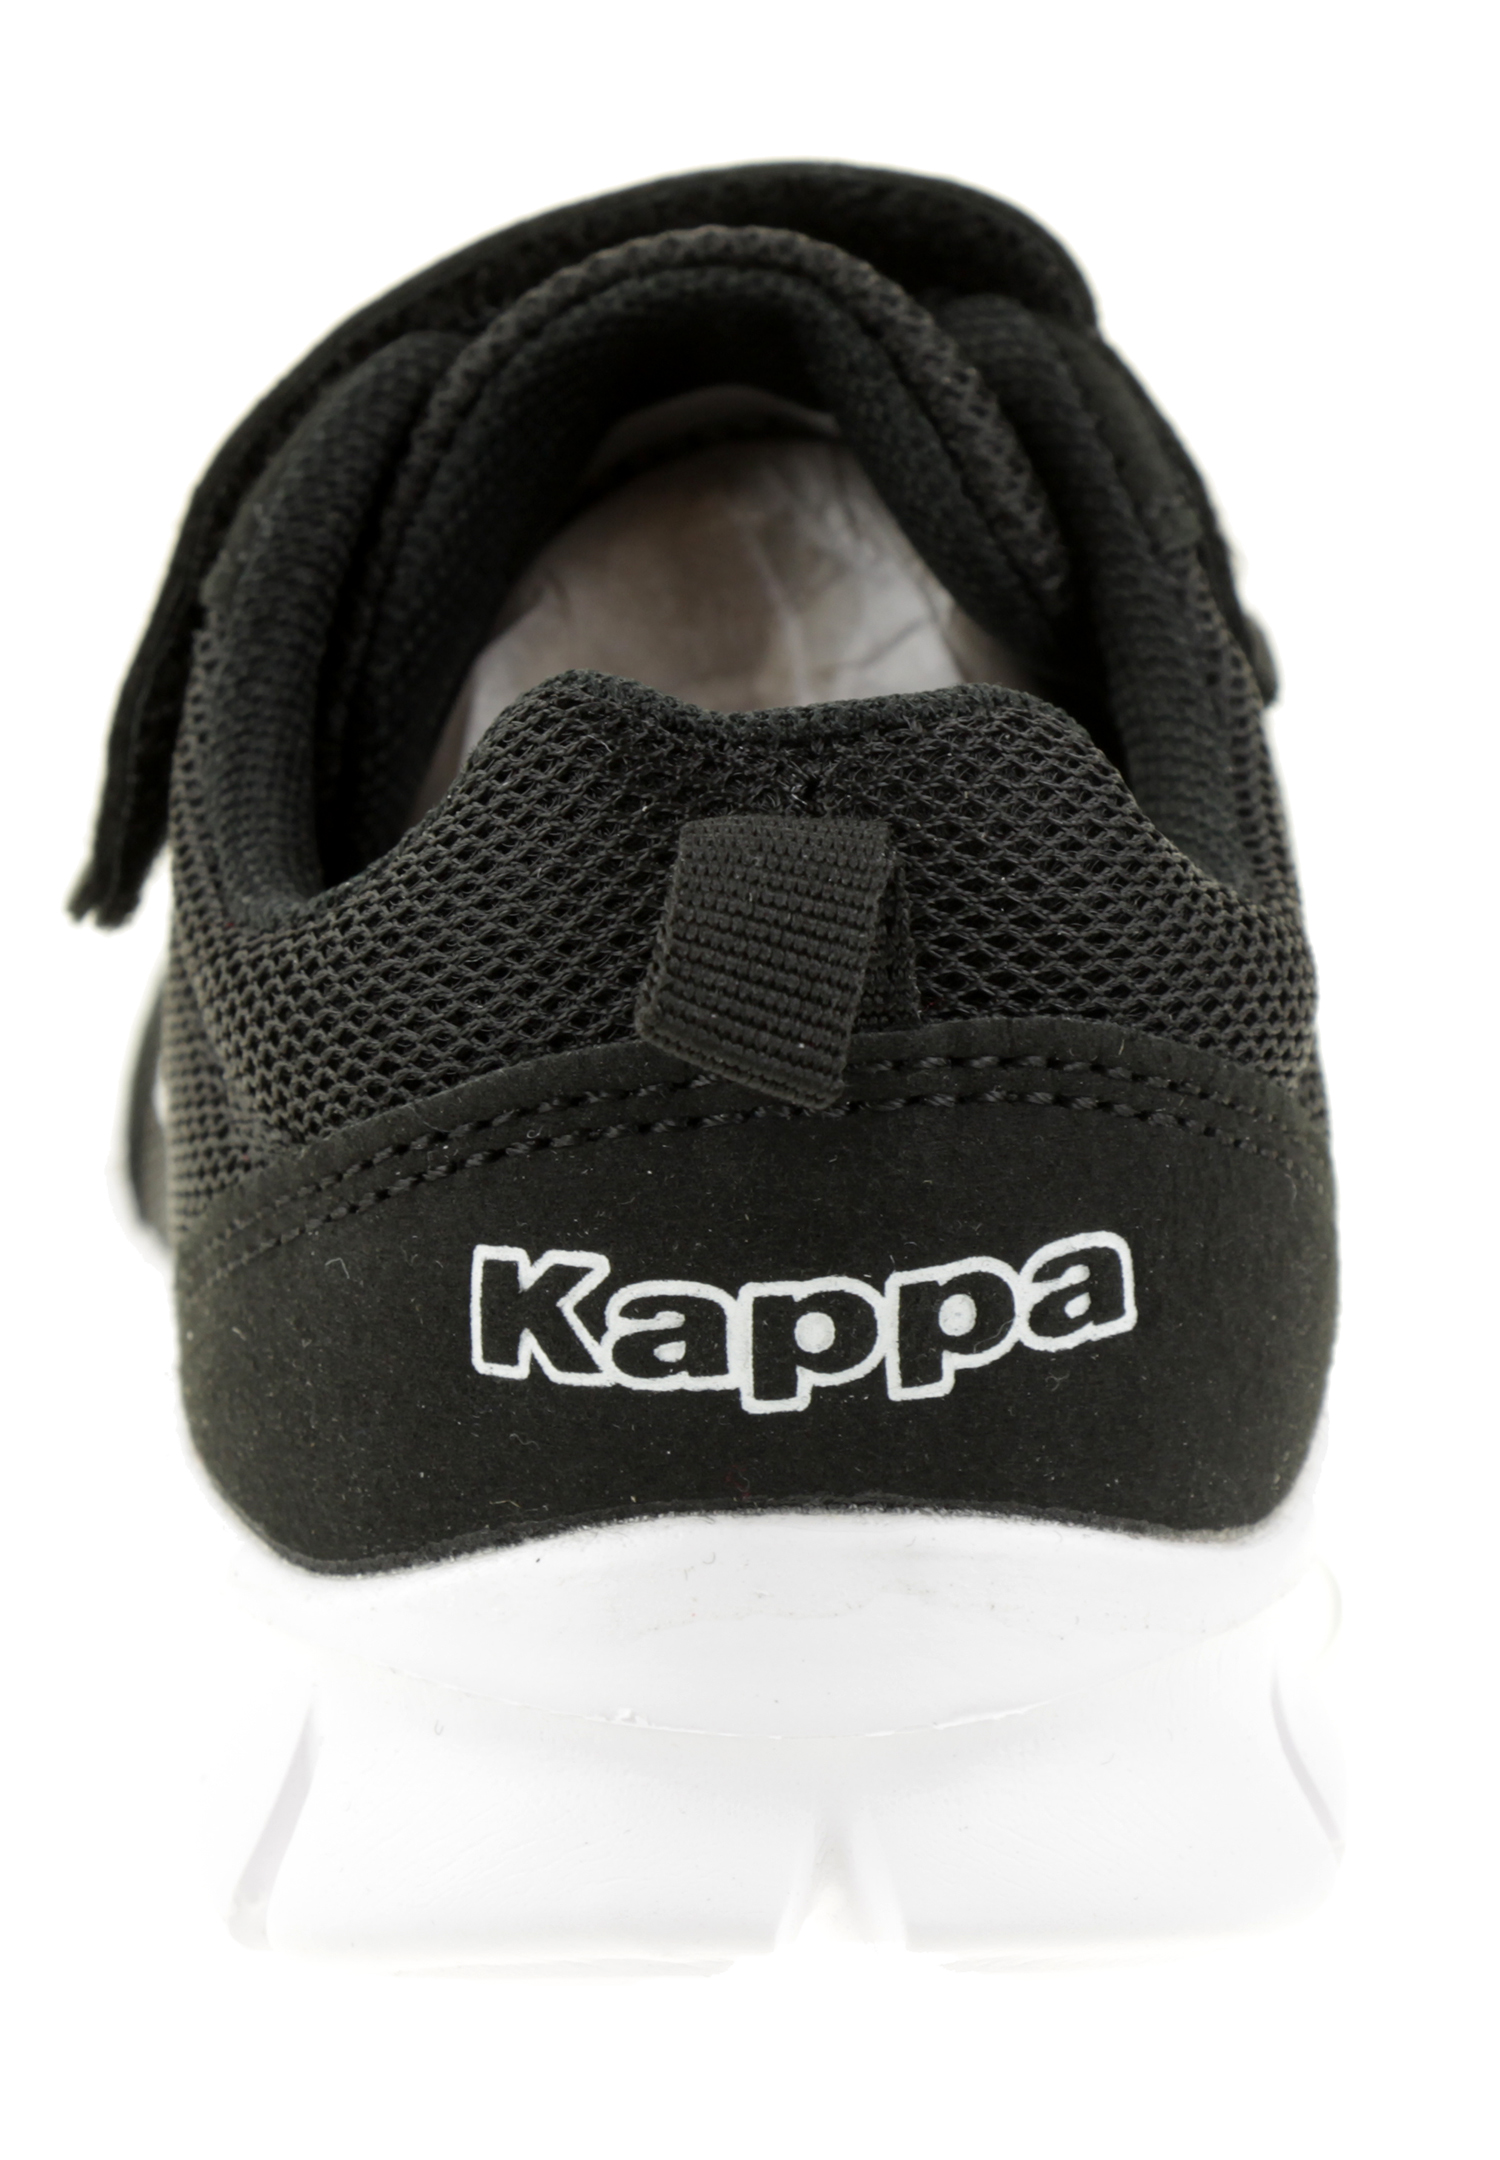 Kappa Unisex 1110 Kinder 260982K Turnschuh Sneaker Black/white